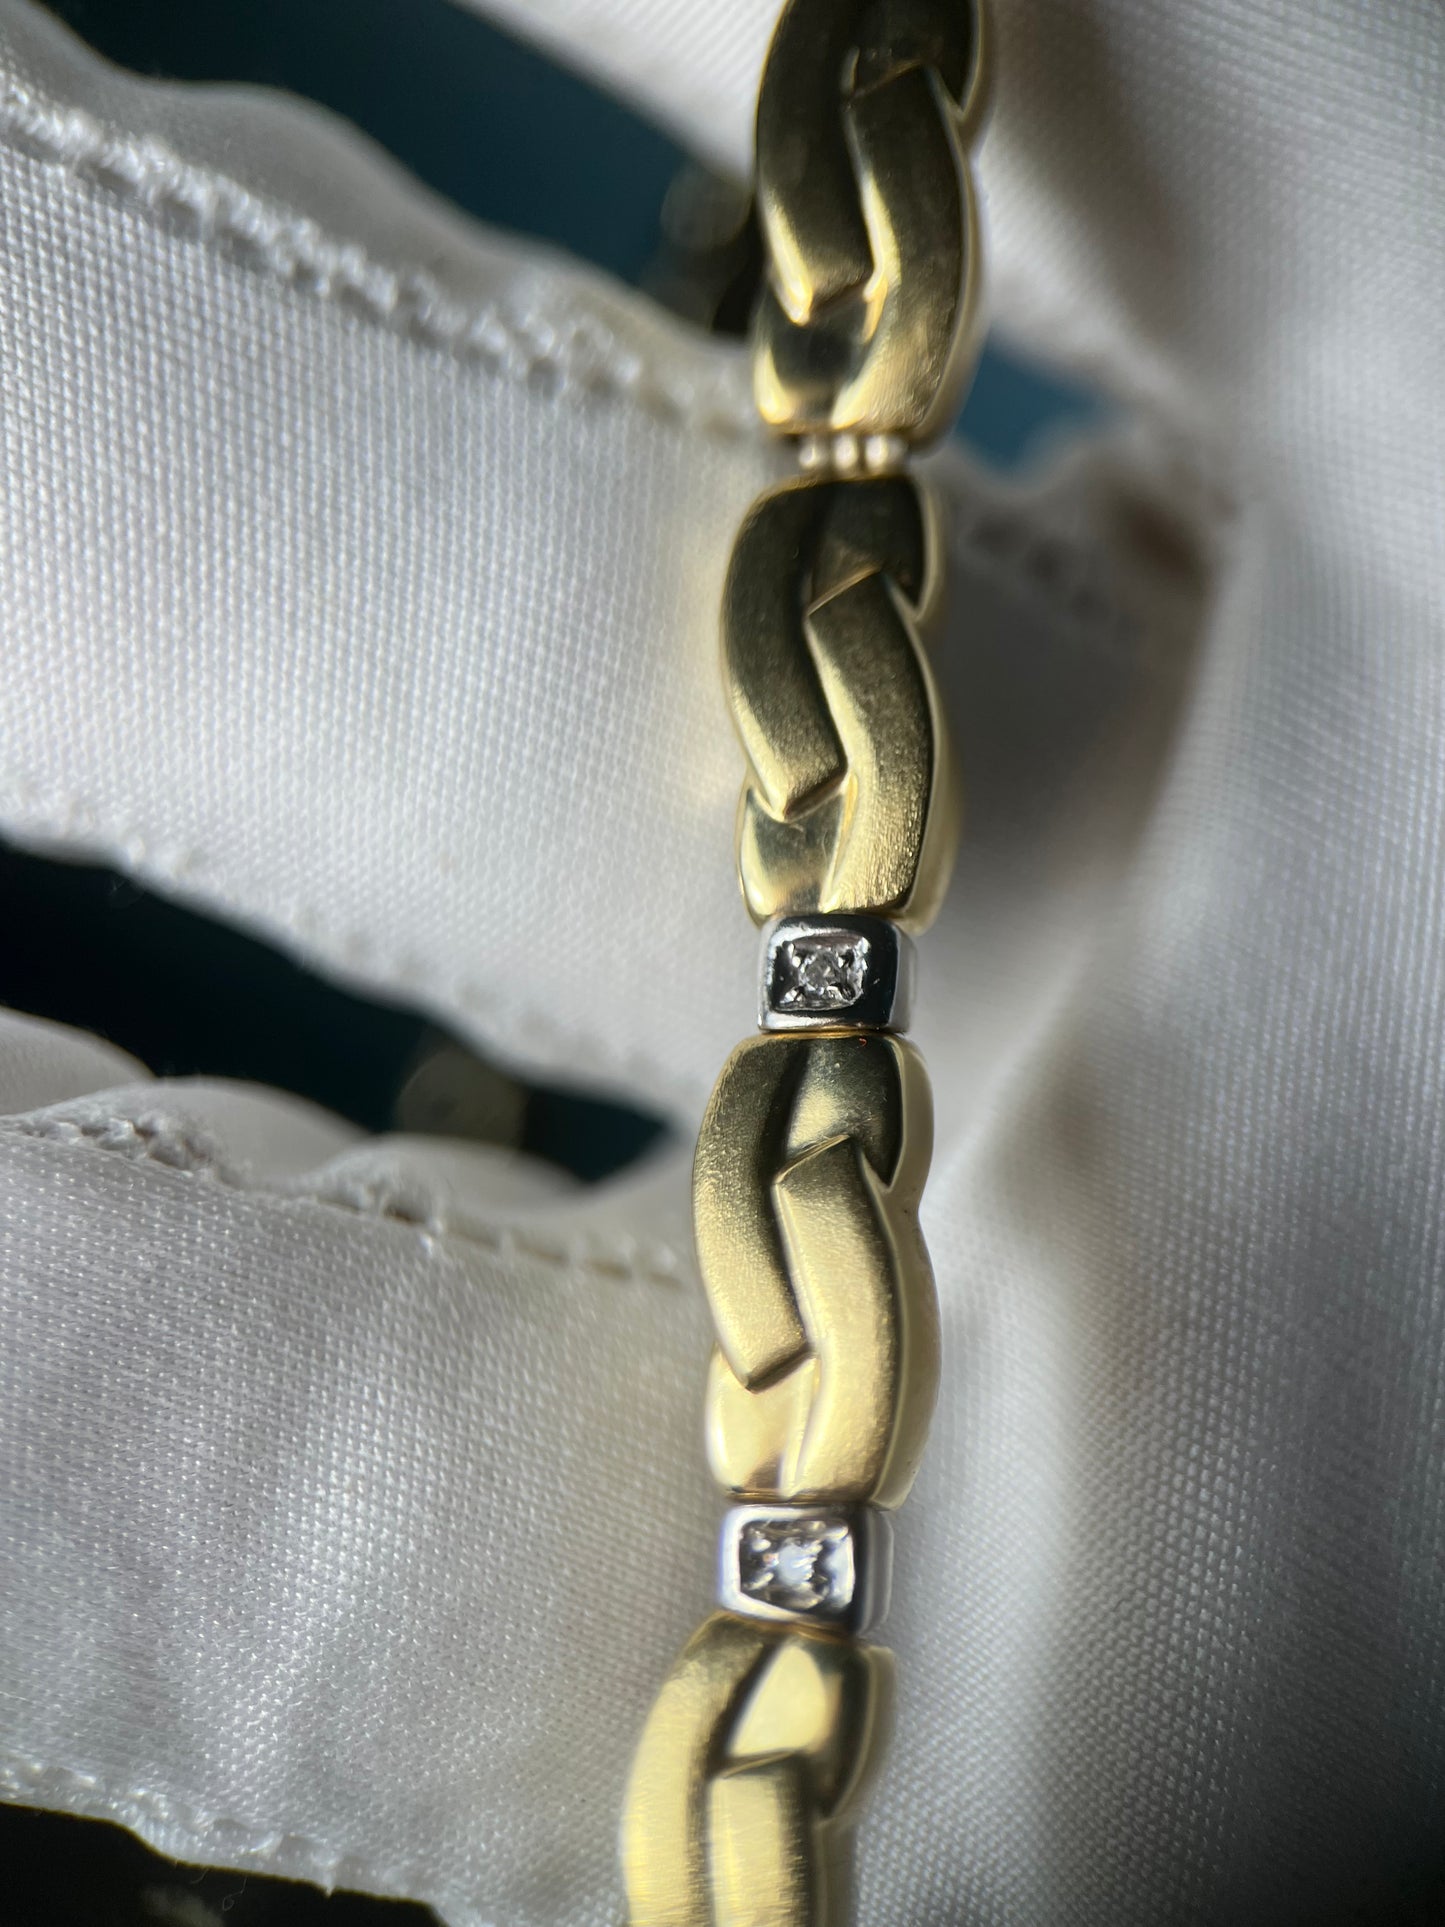 ‘S’ Link Diamond Tennis Chain & Bracelet Set in 14k Yellow Gold